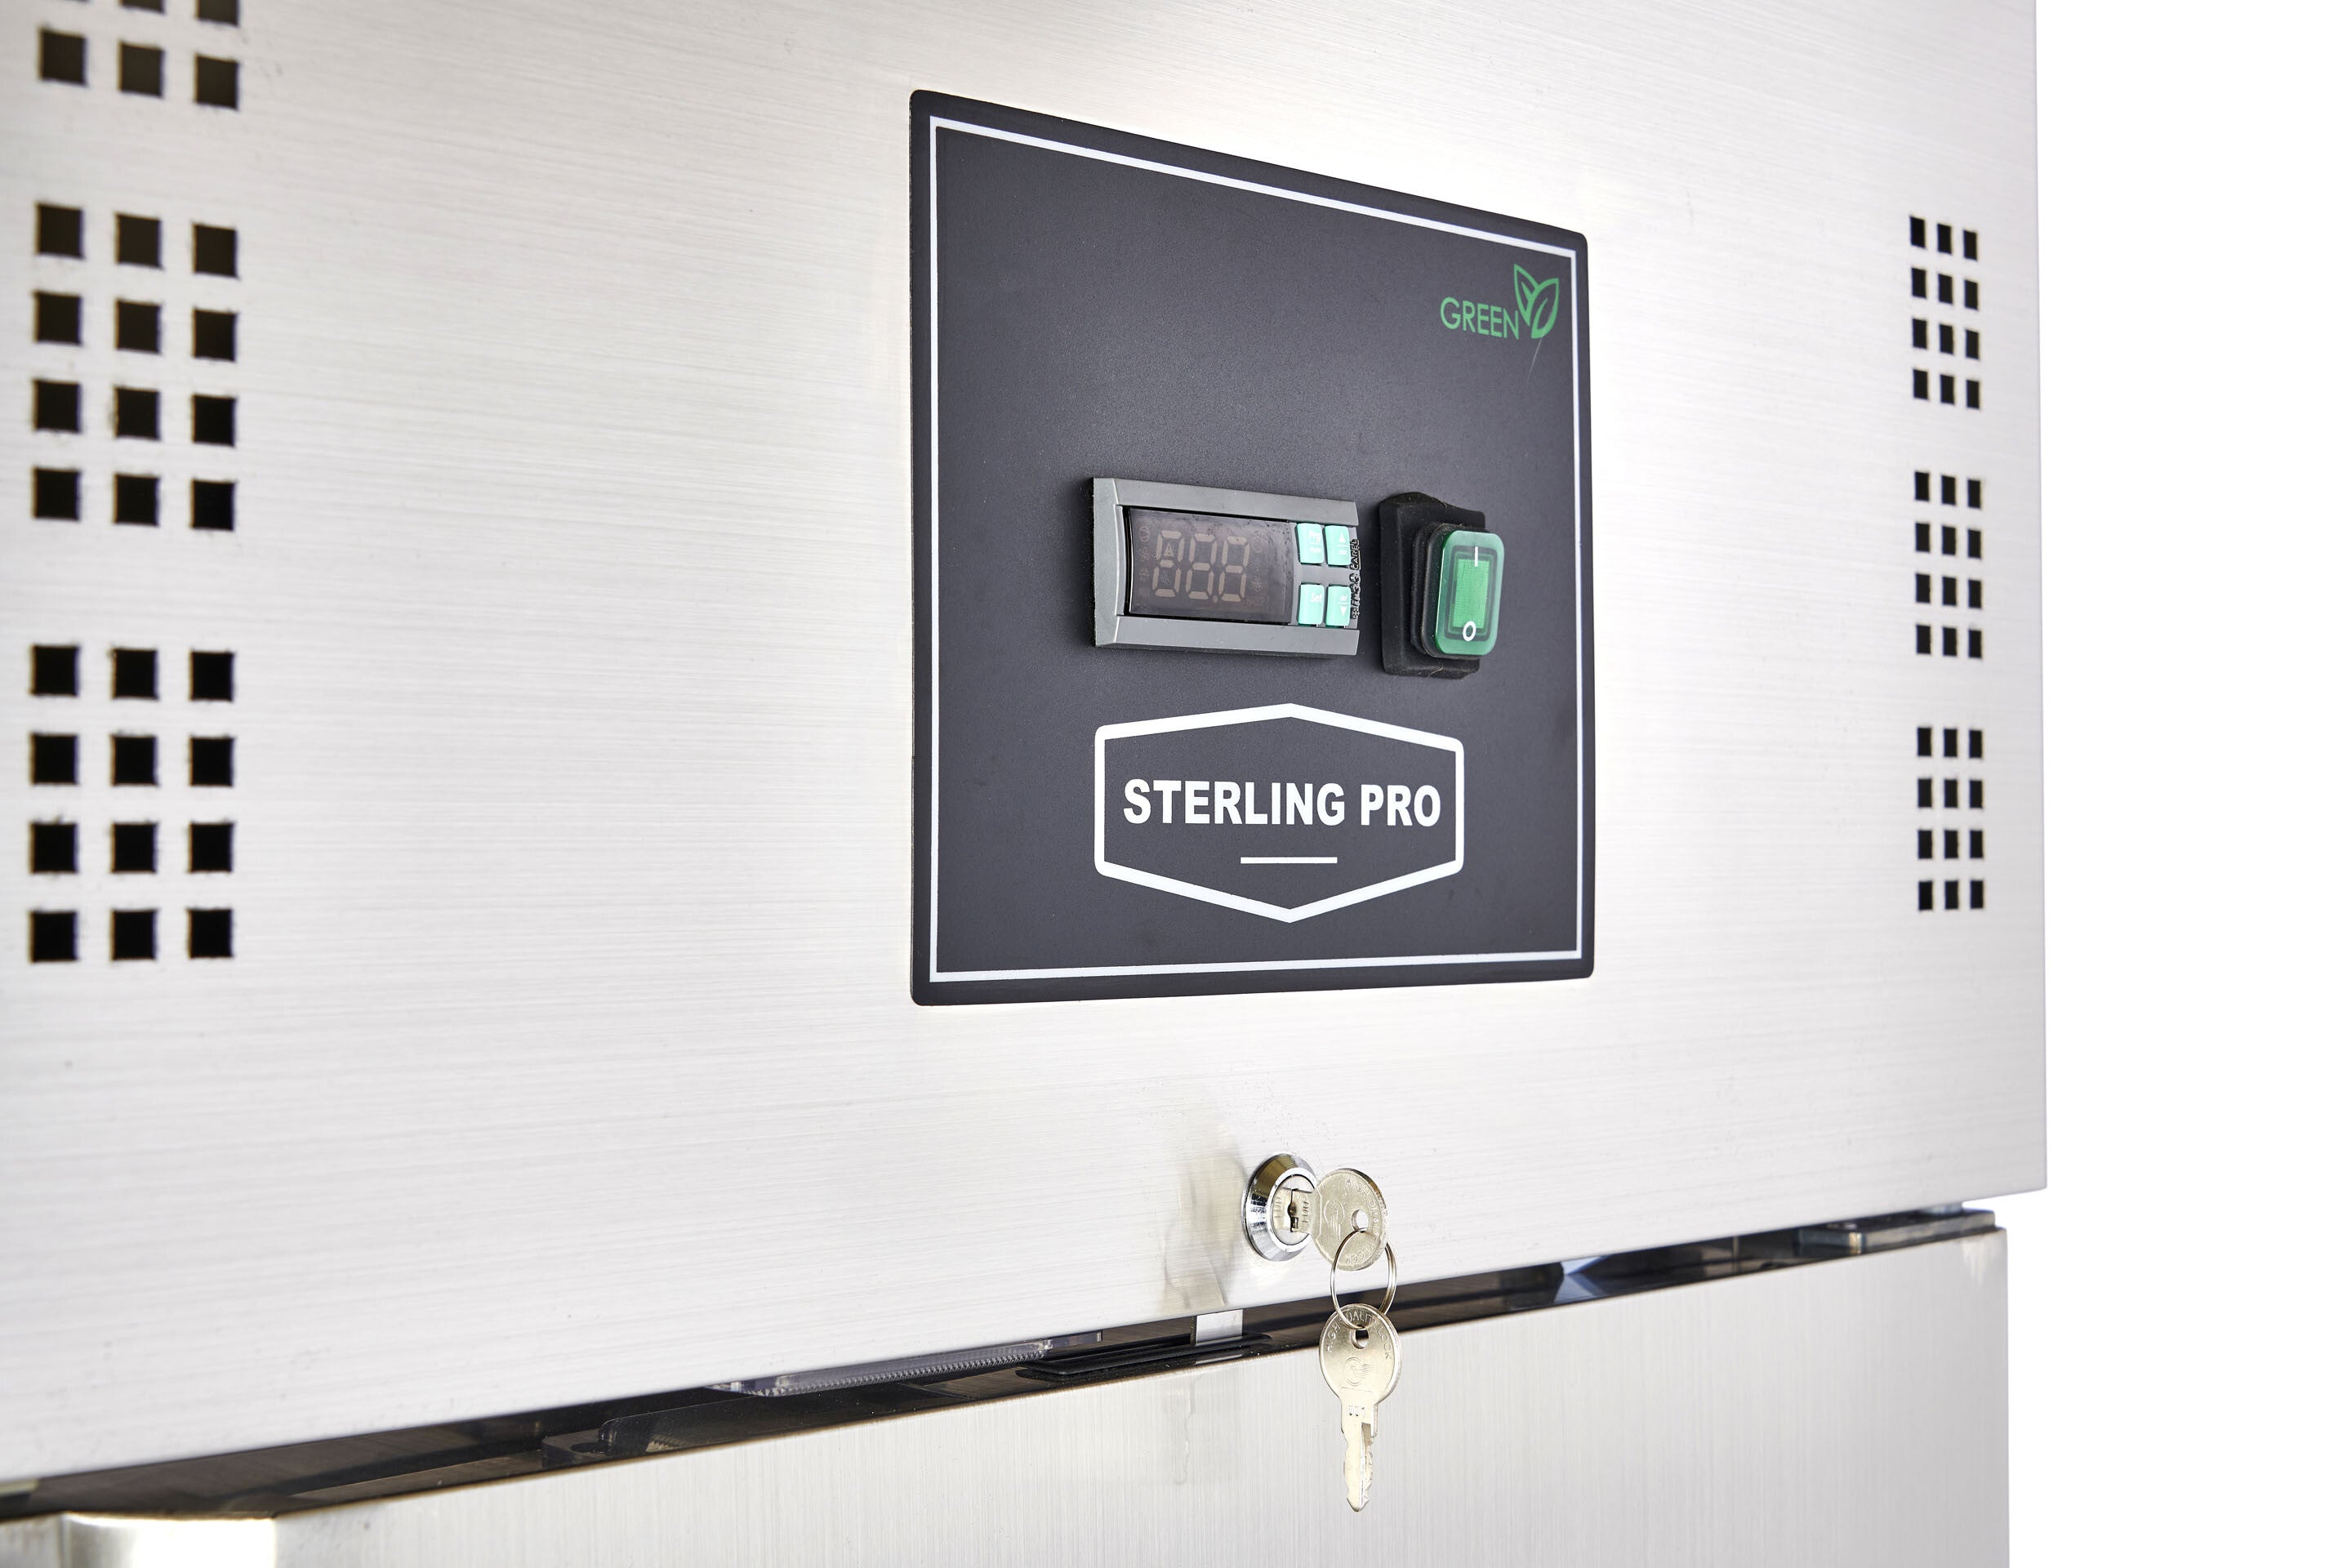 Sterling Pro Cobus SPR160PV Single Door Gastronorm Refrigerator  600 Litres